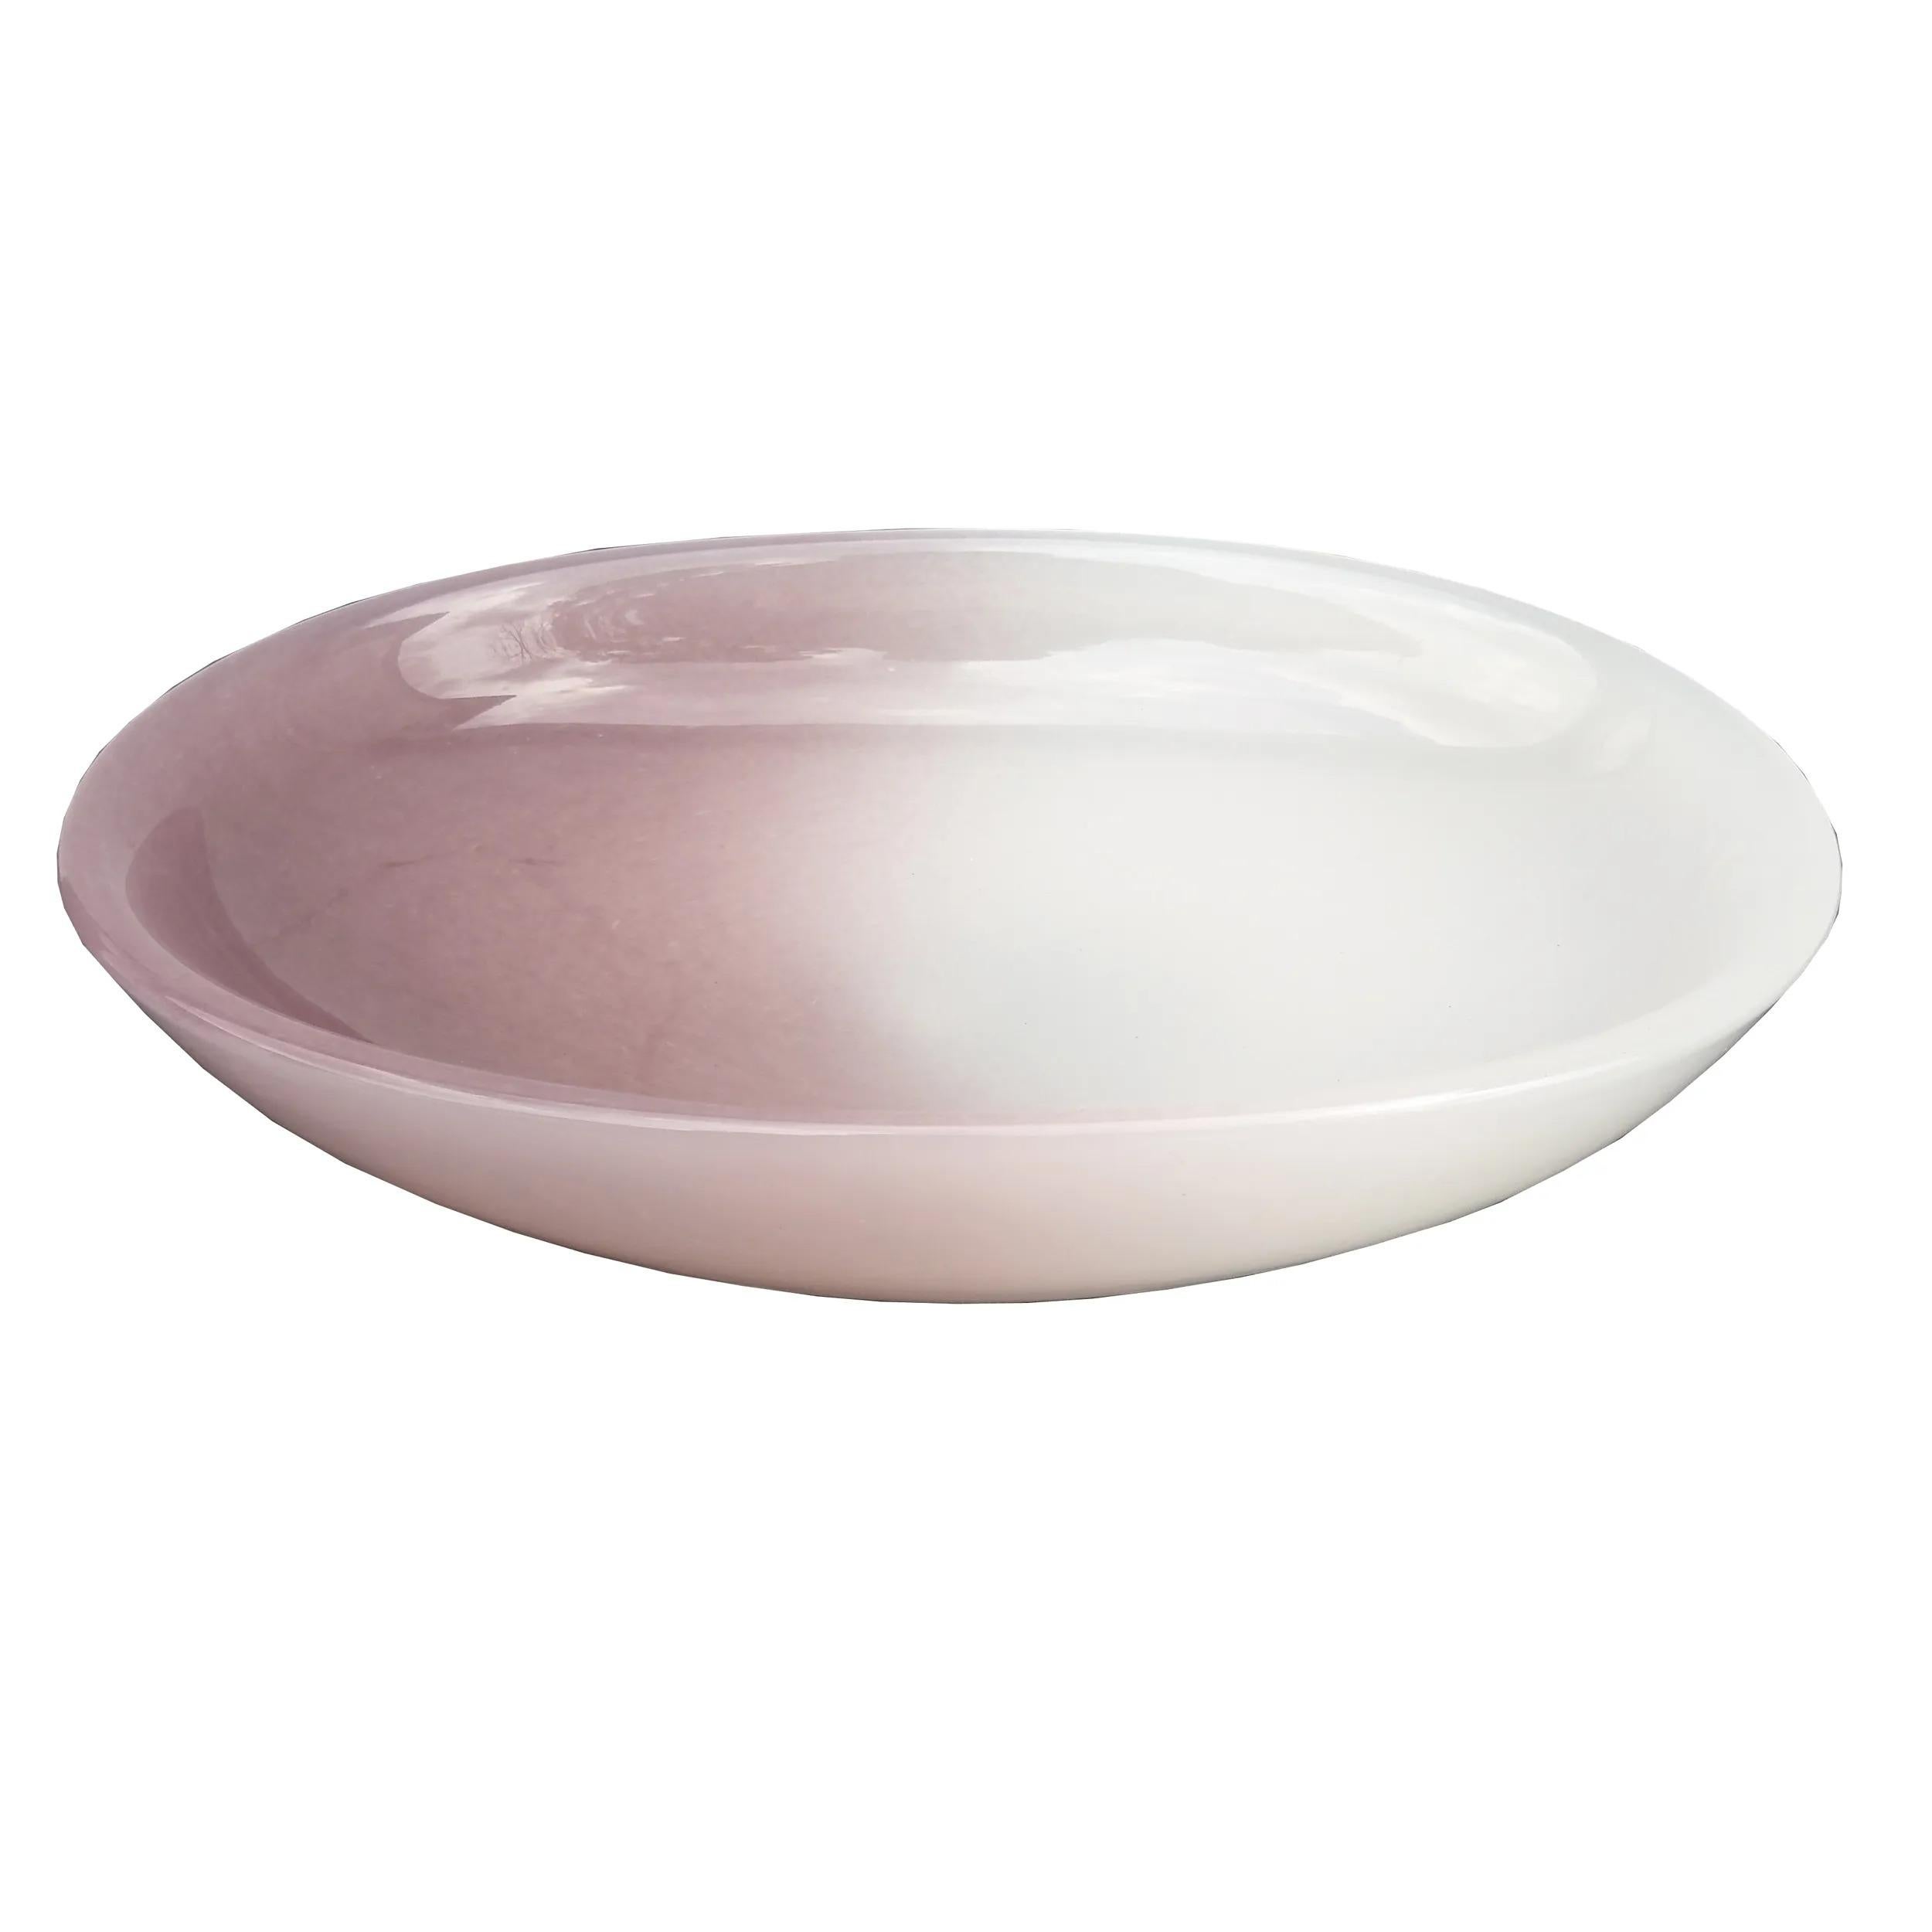 Striking Murano Hand Blown 2 Tone White Italian Art Glass Bowl.

Beautiful Murano hand blown opal Italian art glass bowl. Can be used as a display piece on any table. Measures: 13